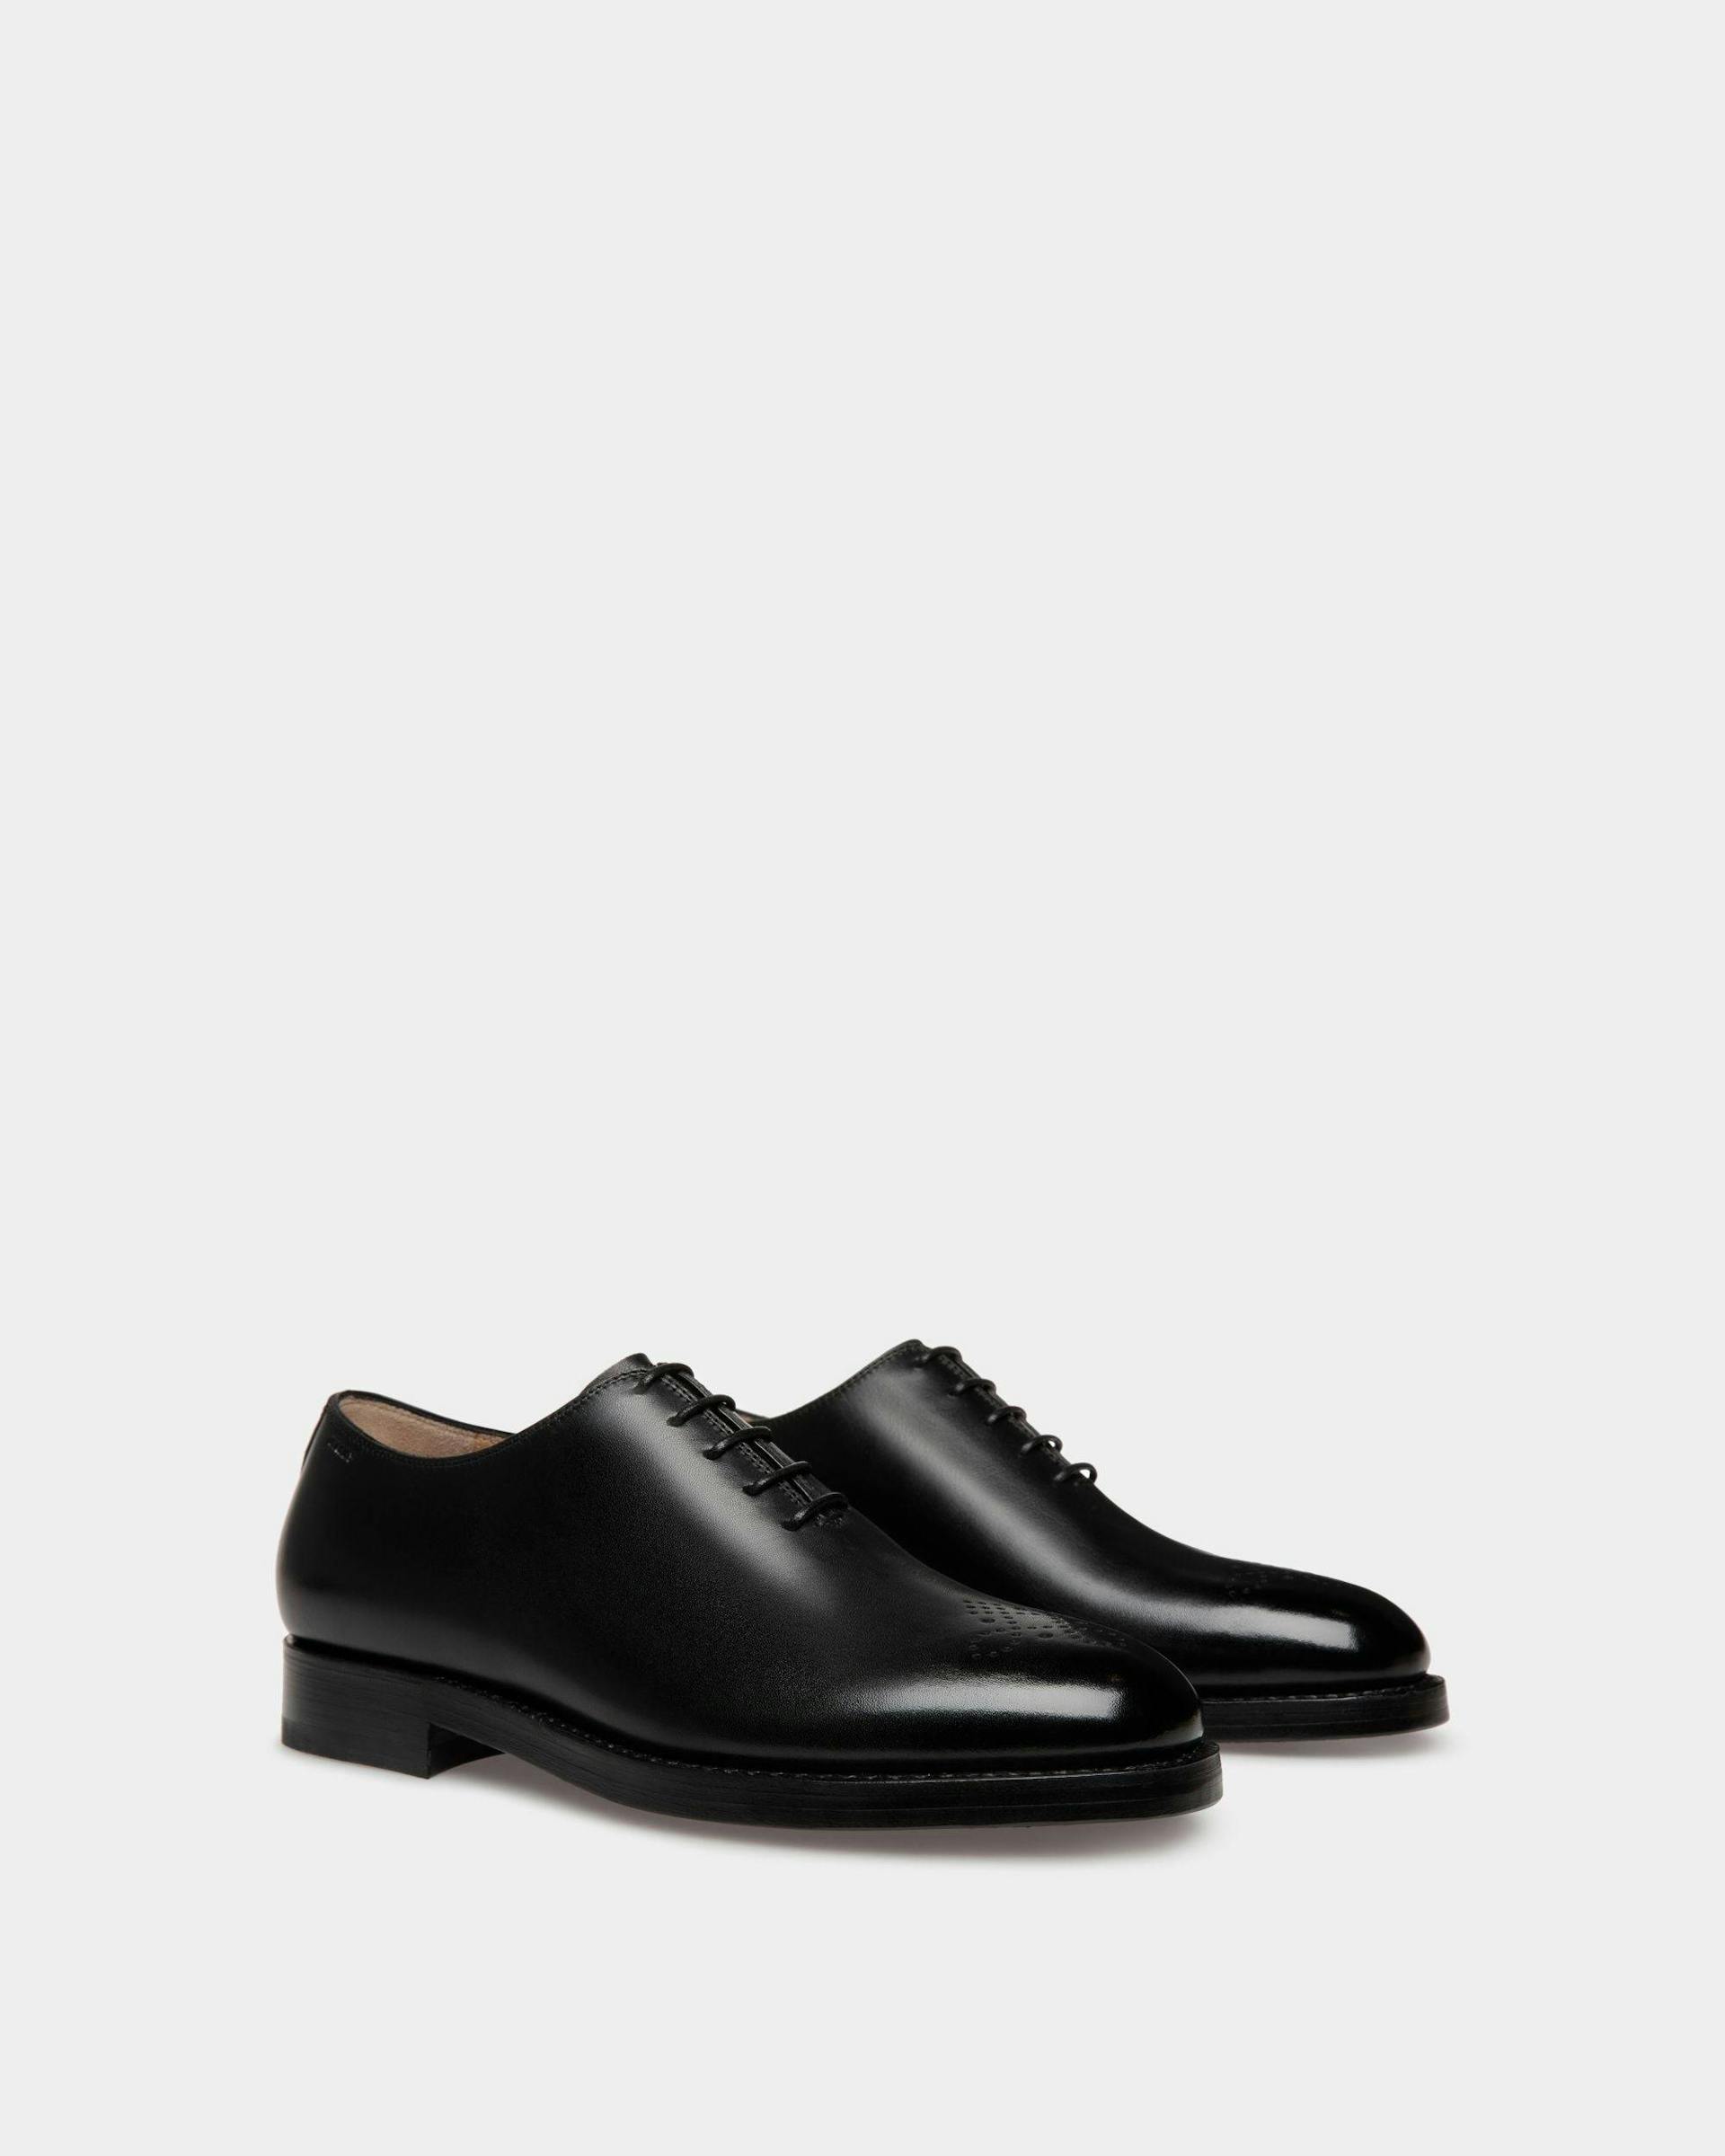 Men's Schoenen Oxford In Black Leather | Bally | Still Life 3/4 Front